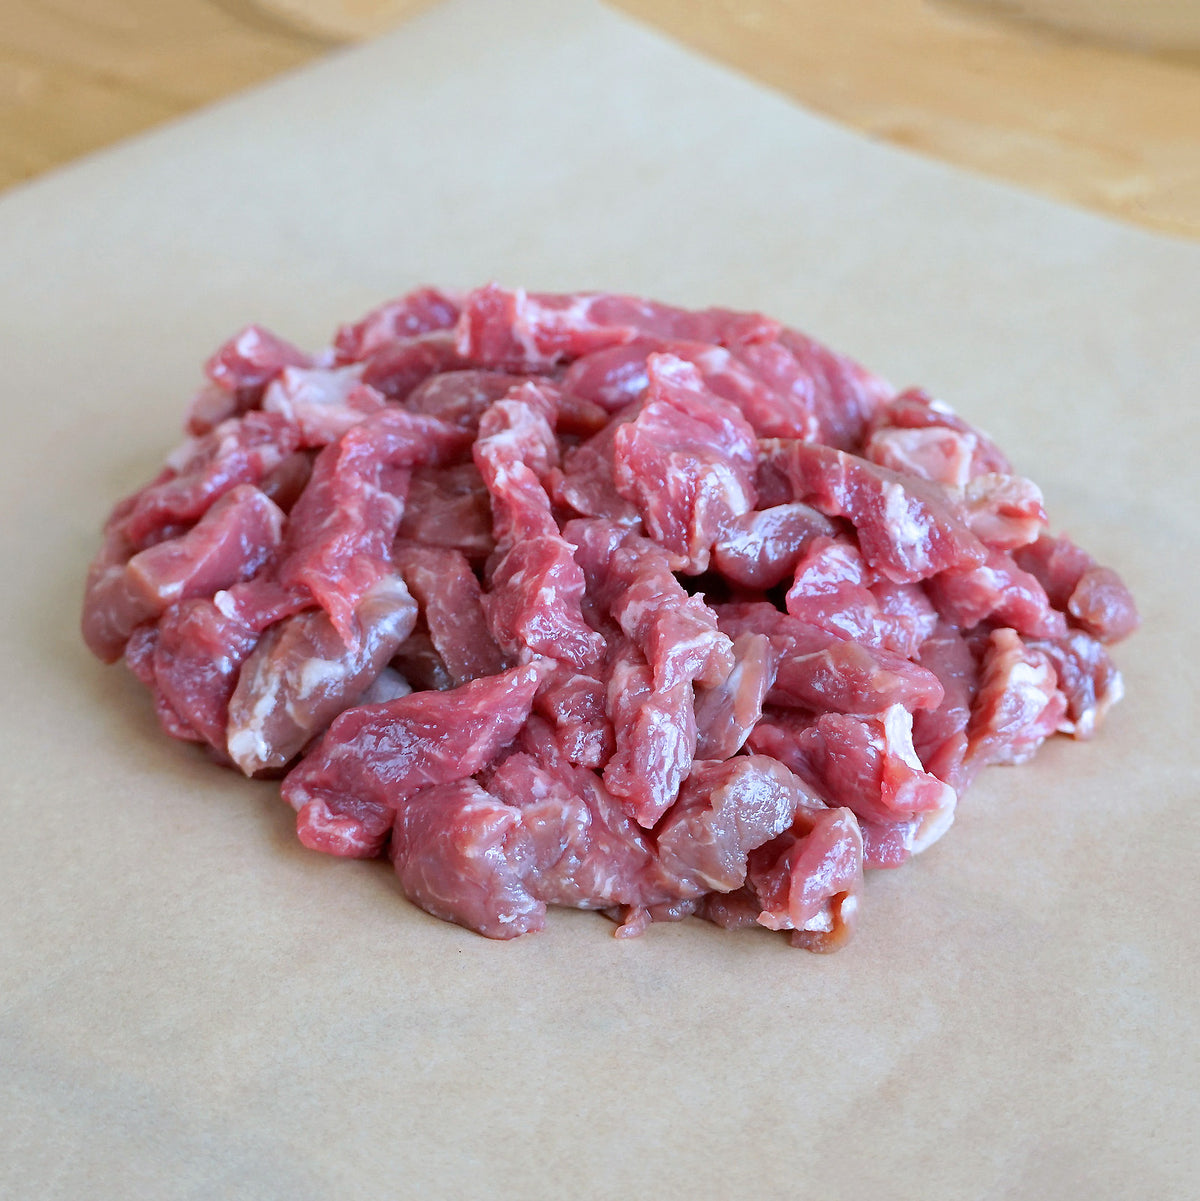 Grass-Fed Beef Steak Stir-Fry Cuts (300g) - Horizon Farms